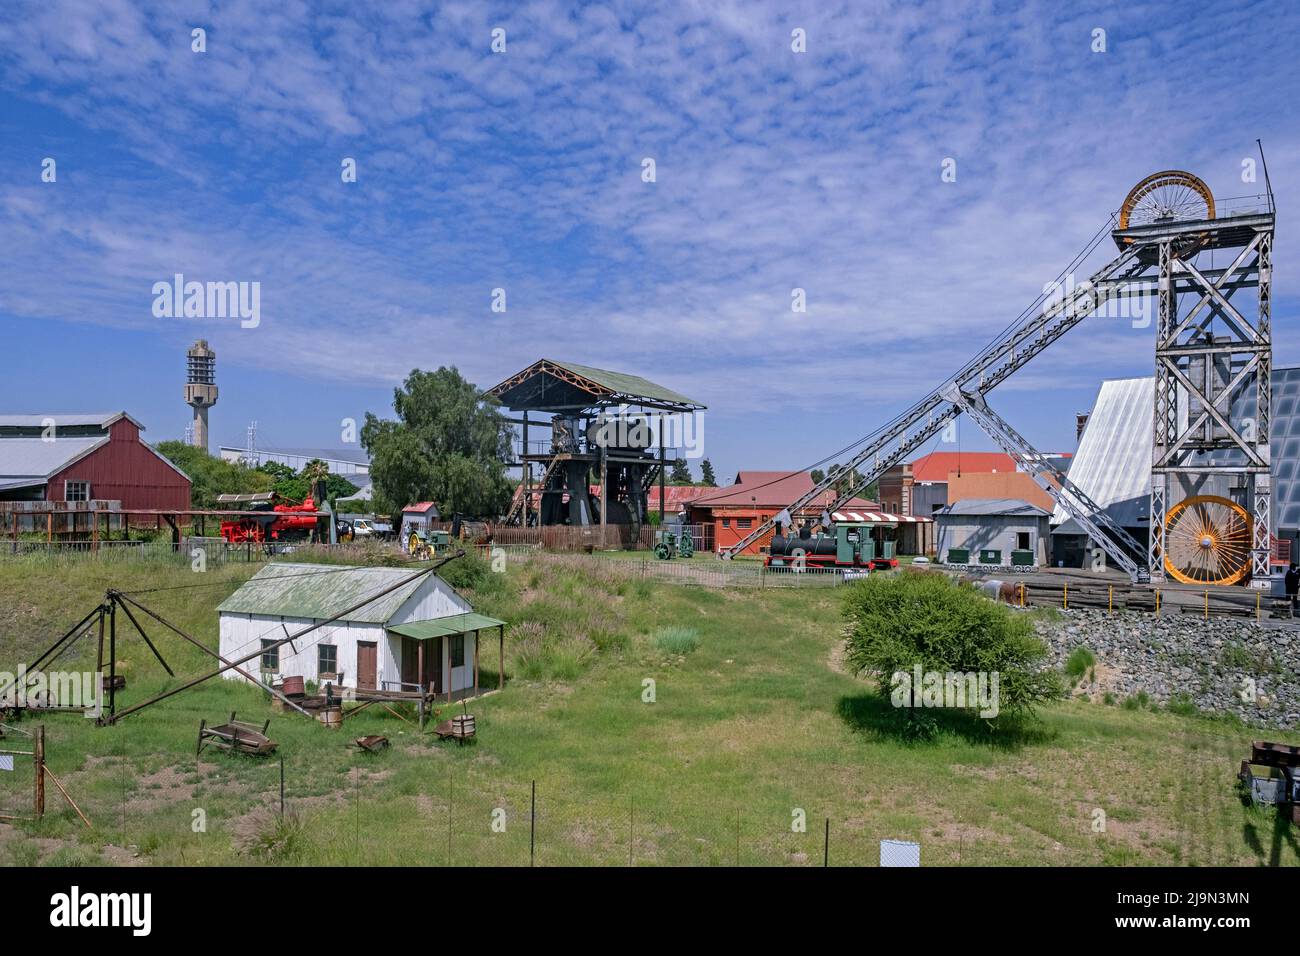 Kopfgestell/Windturm/Hebevorrichtung des Big Hole and Open Mine Museum in Kimberley, Frances Baard, Provinz Nordkap, Südafrika Stockfoto